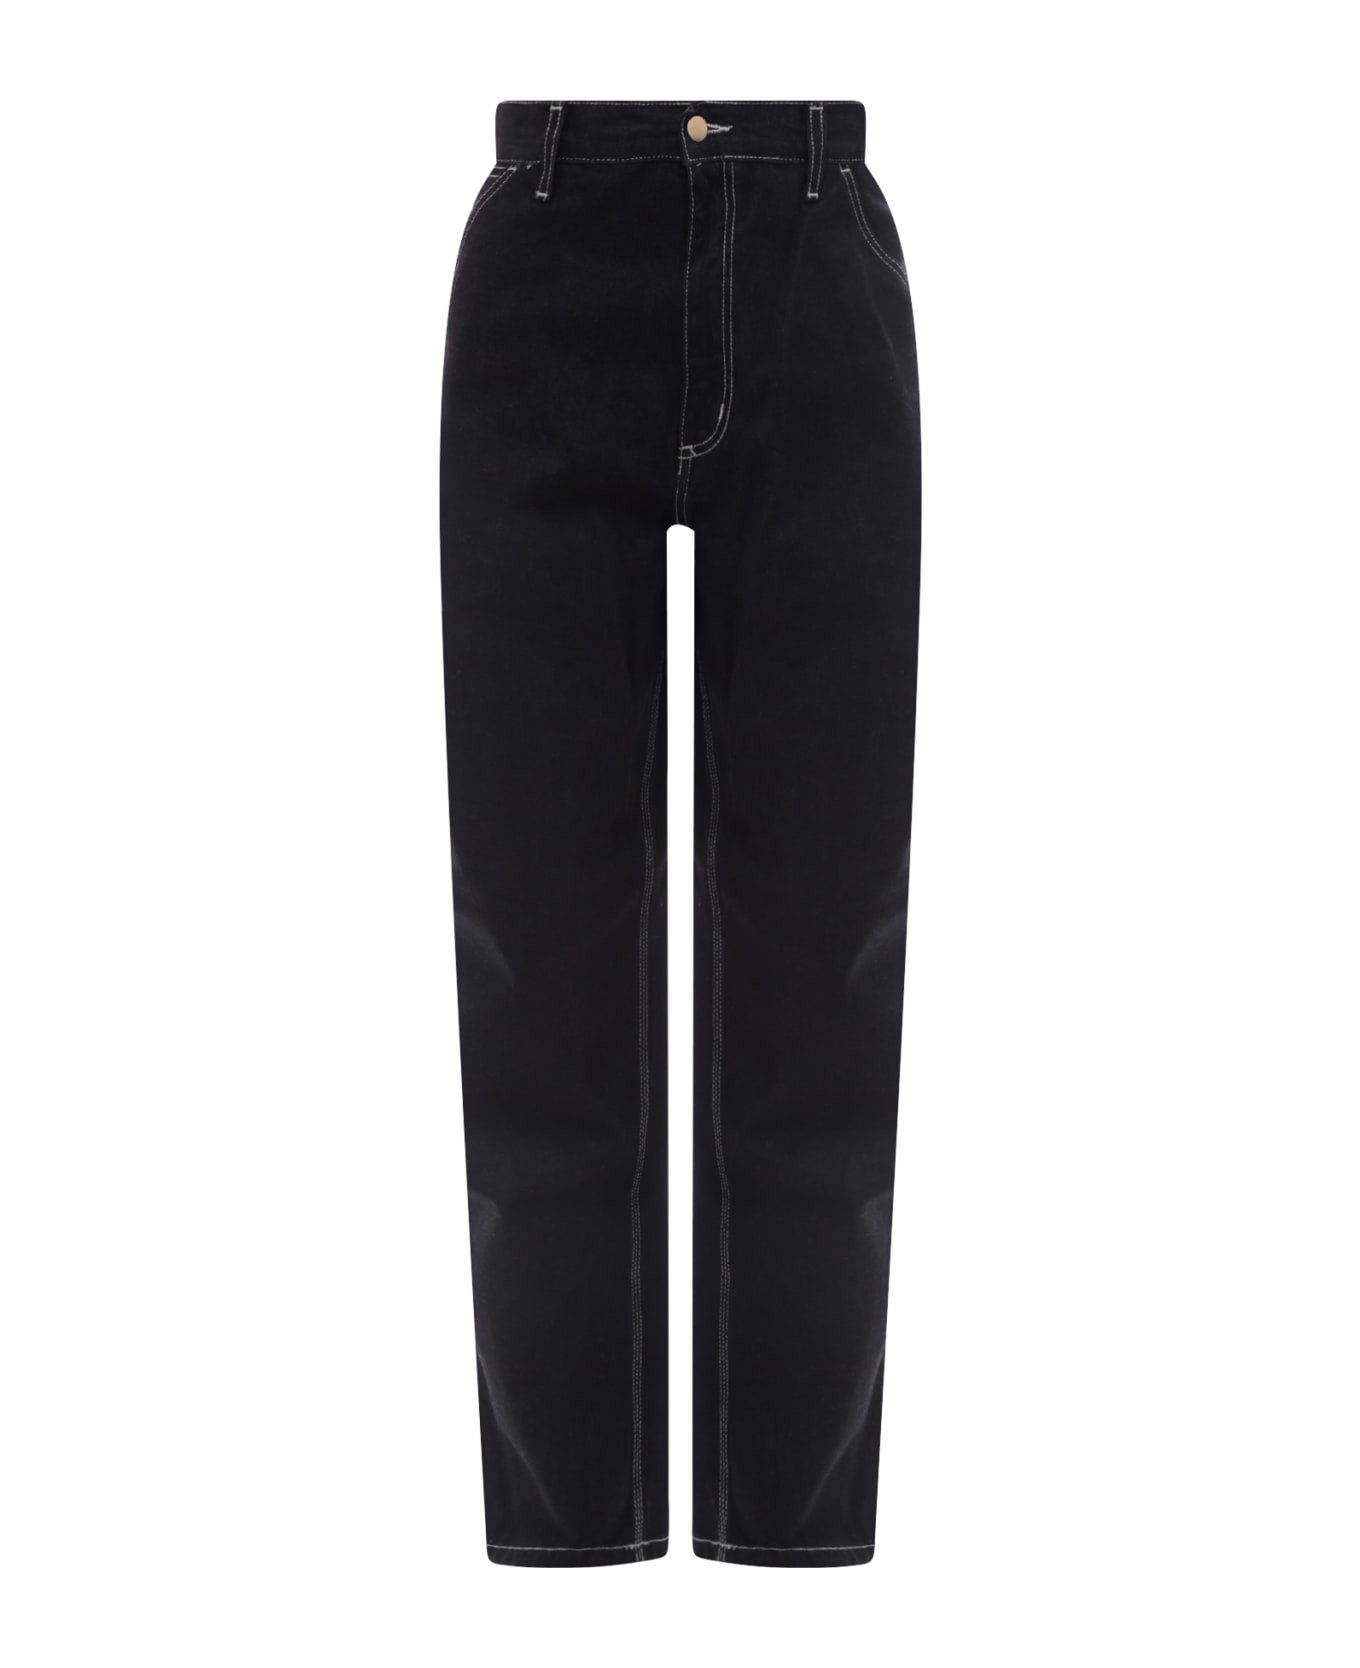 Carhartt Simple Pant Trouser - Black